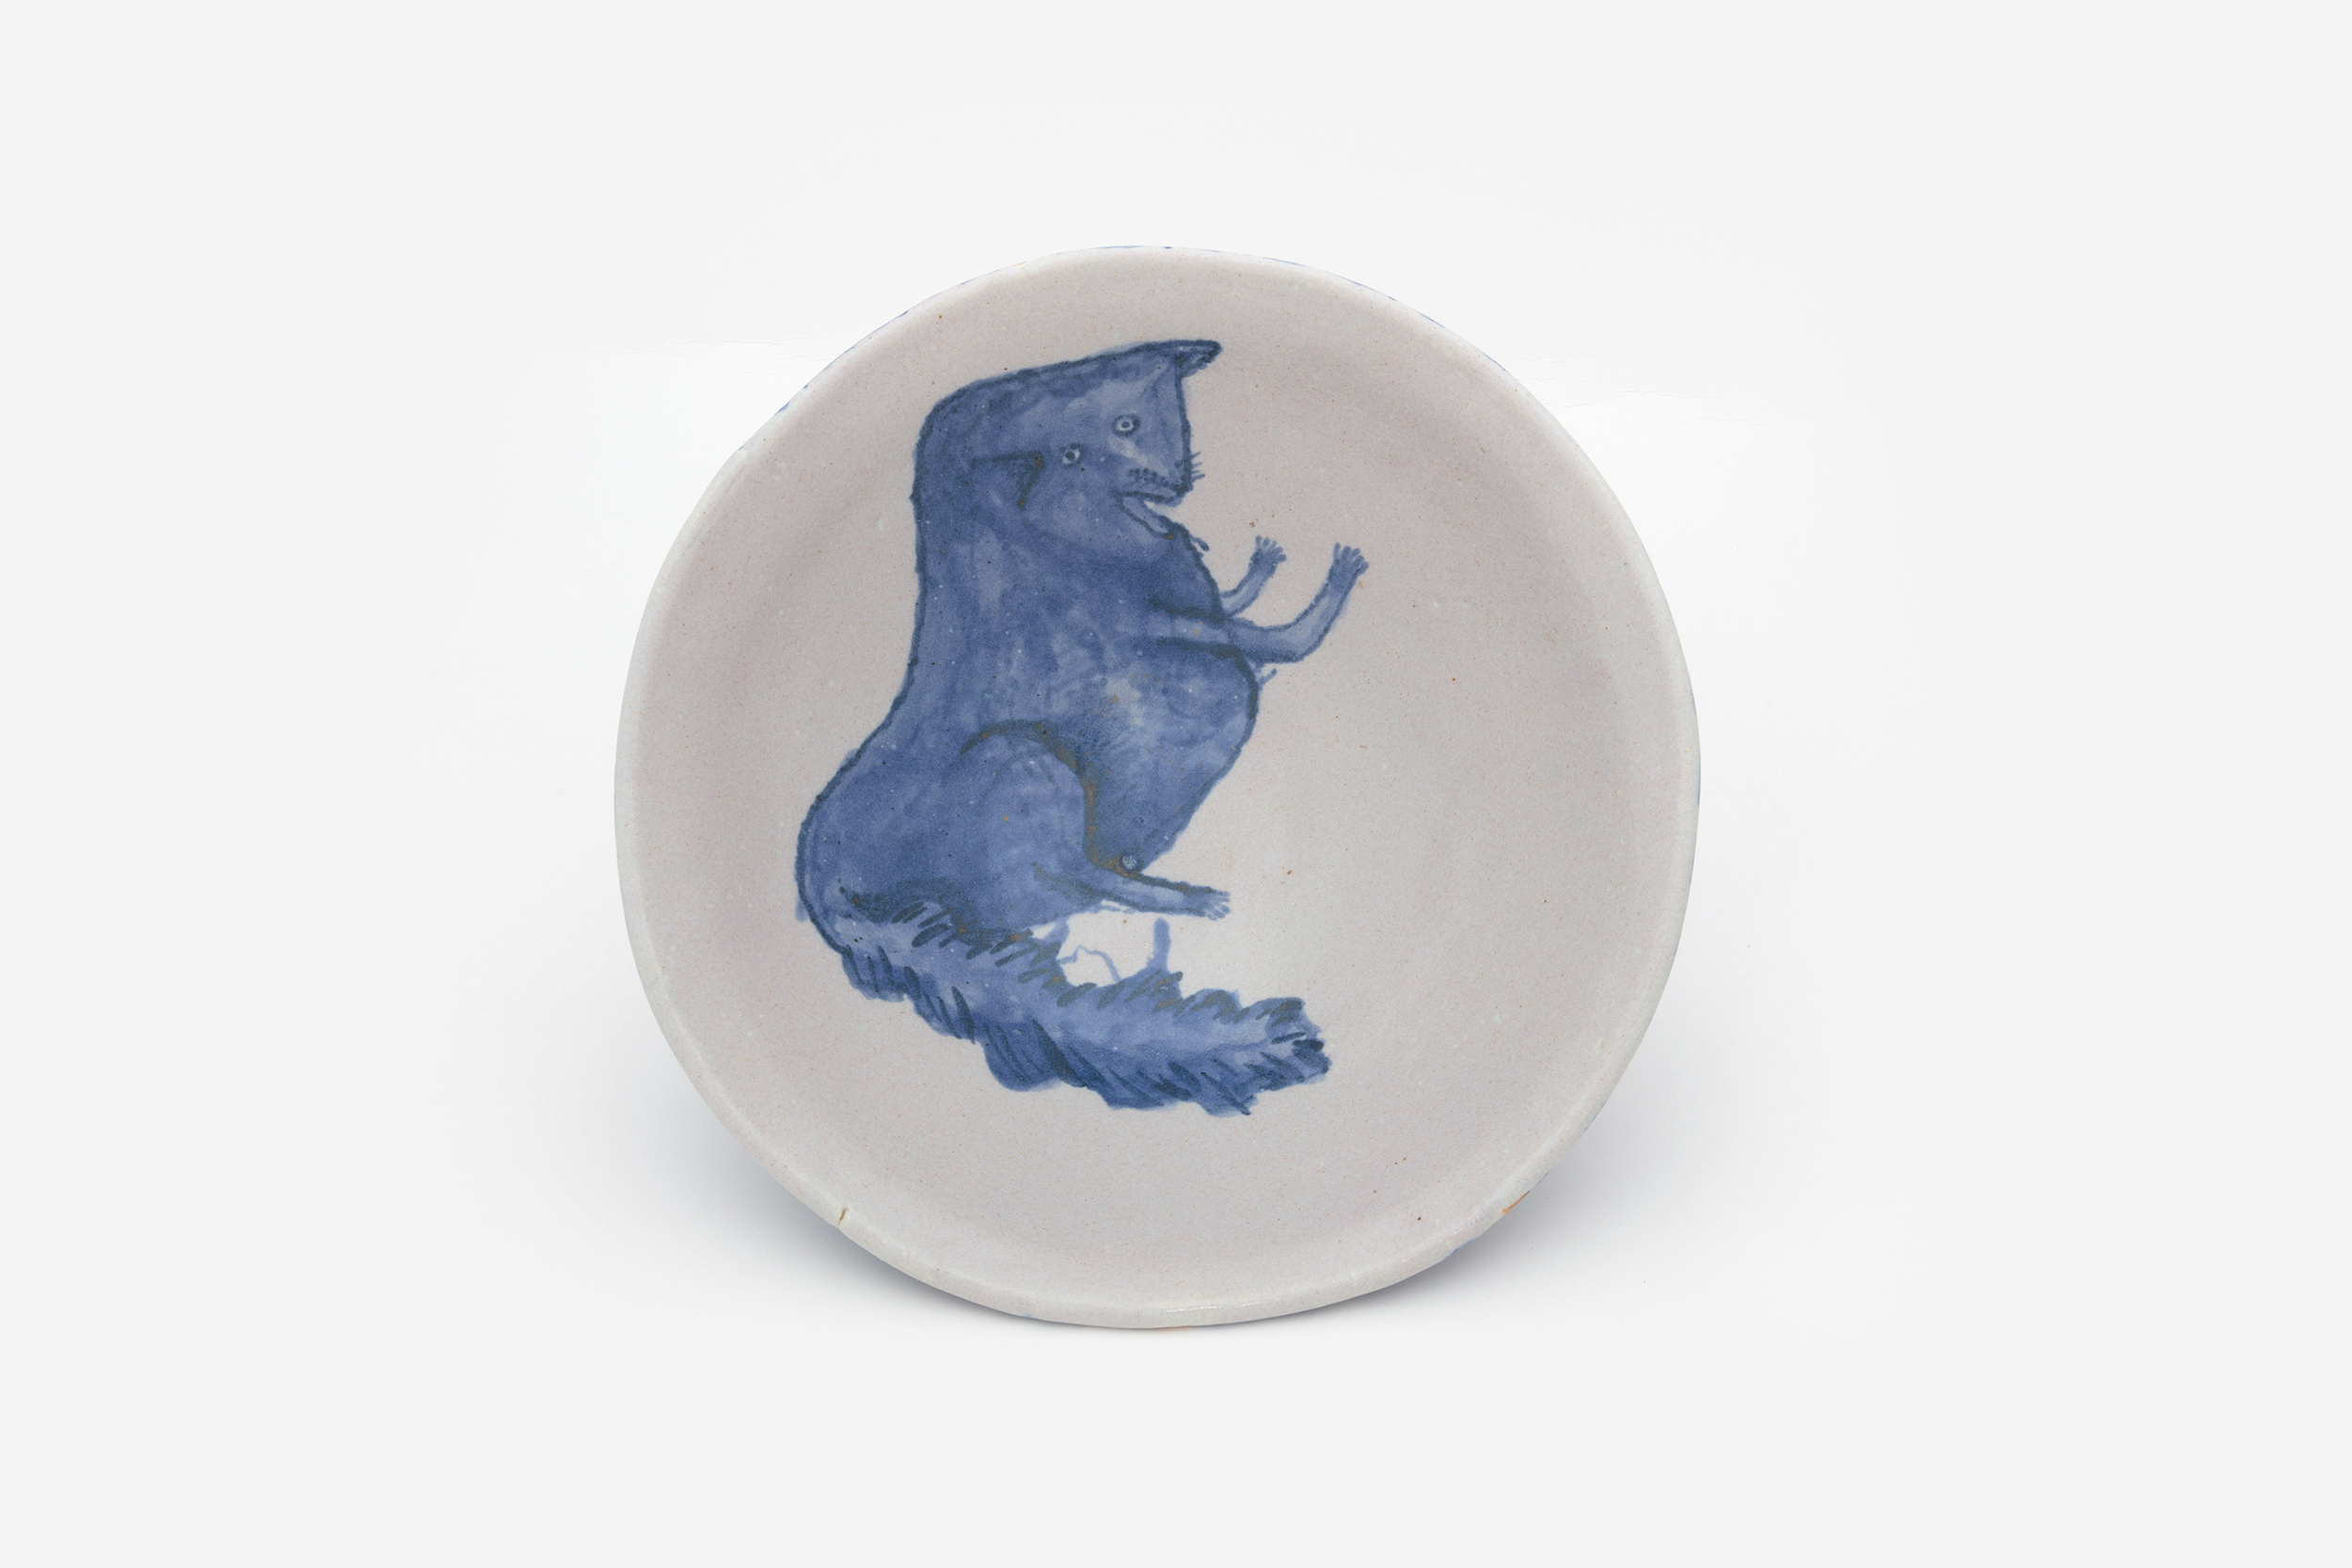 Hylton Nel - Blue creature bowl, 17 November 2020